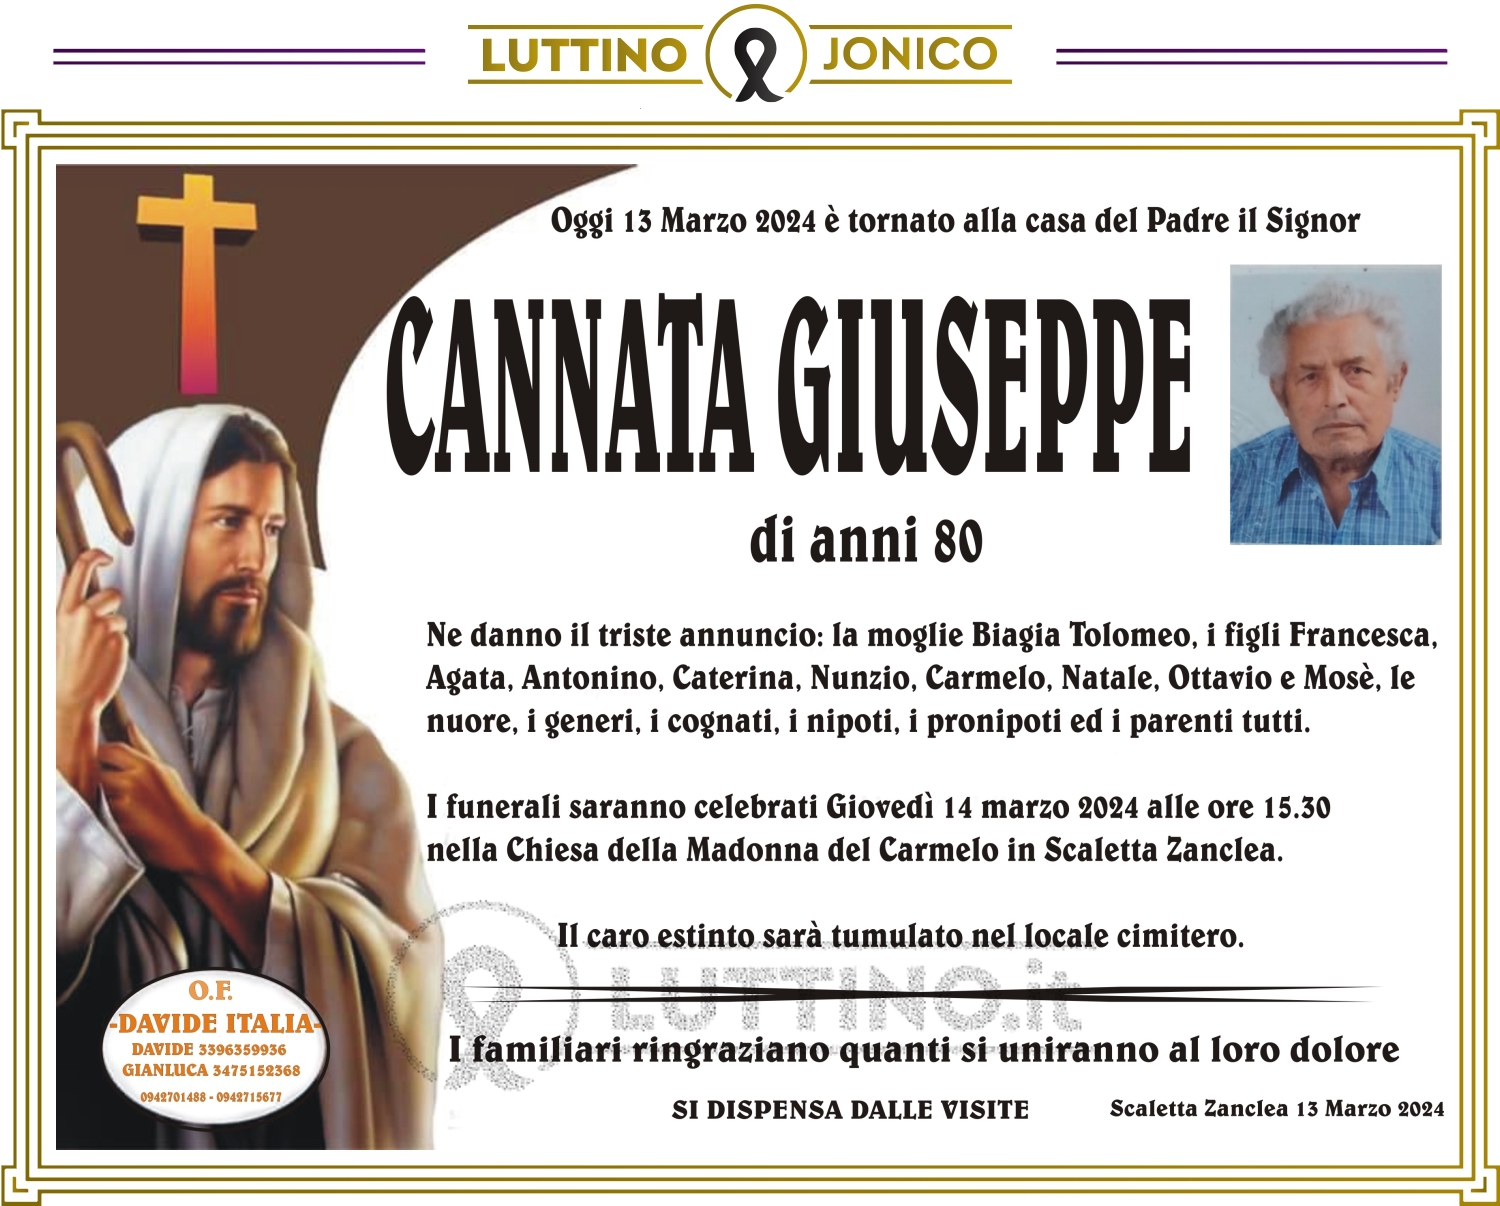 Giuseppe Cannata